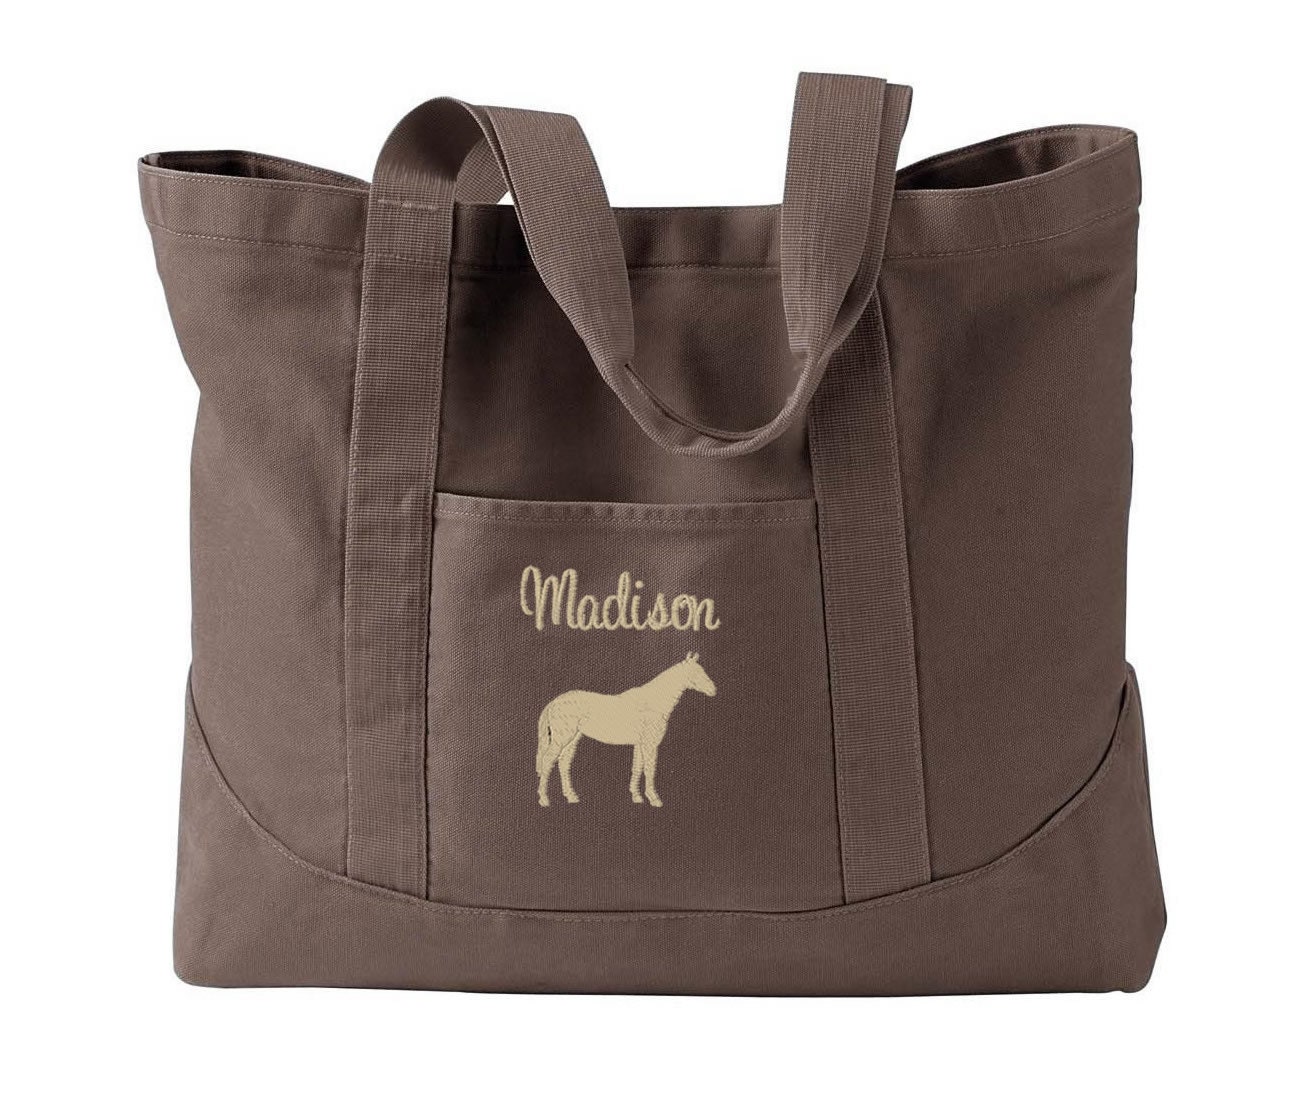 Riding Bag, Barn Bag, Horse Bag, Horse Tote Bag, Personalized Riding Tote, Tack Bag, Barn Tote, Personalized Horse Bag, Horse Gift